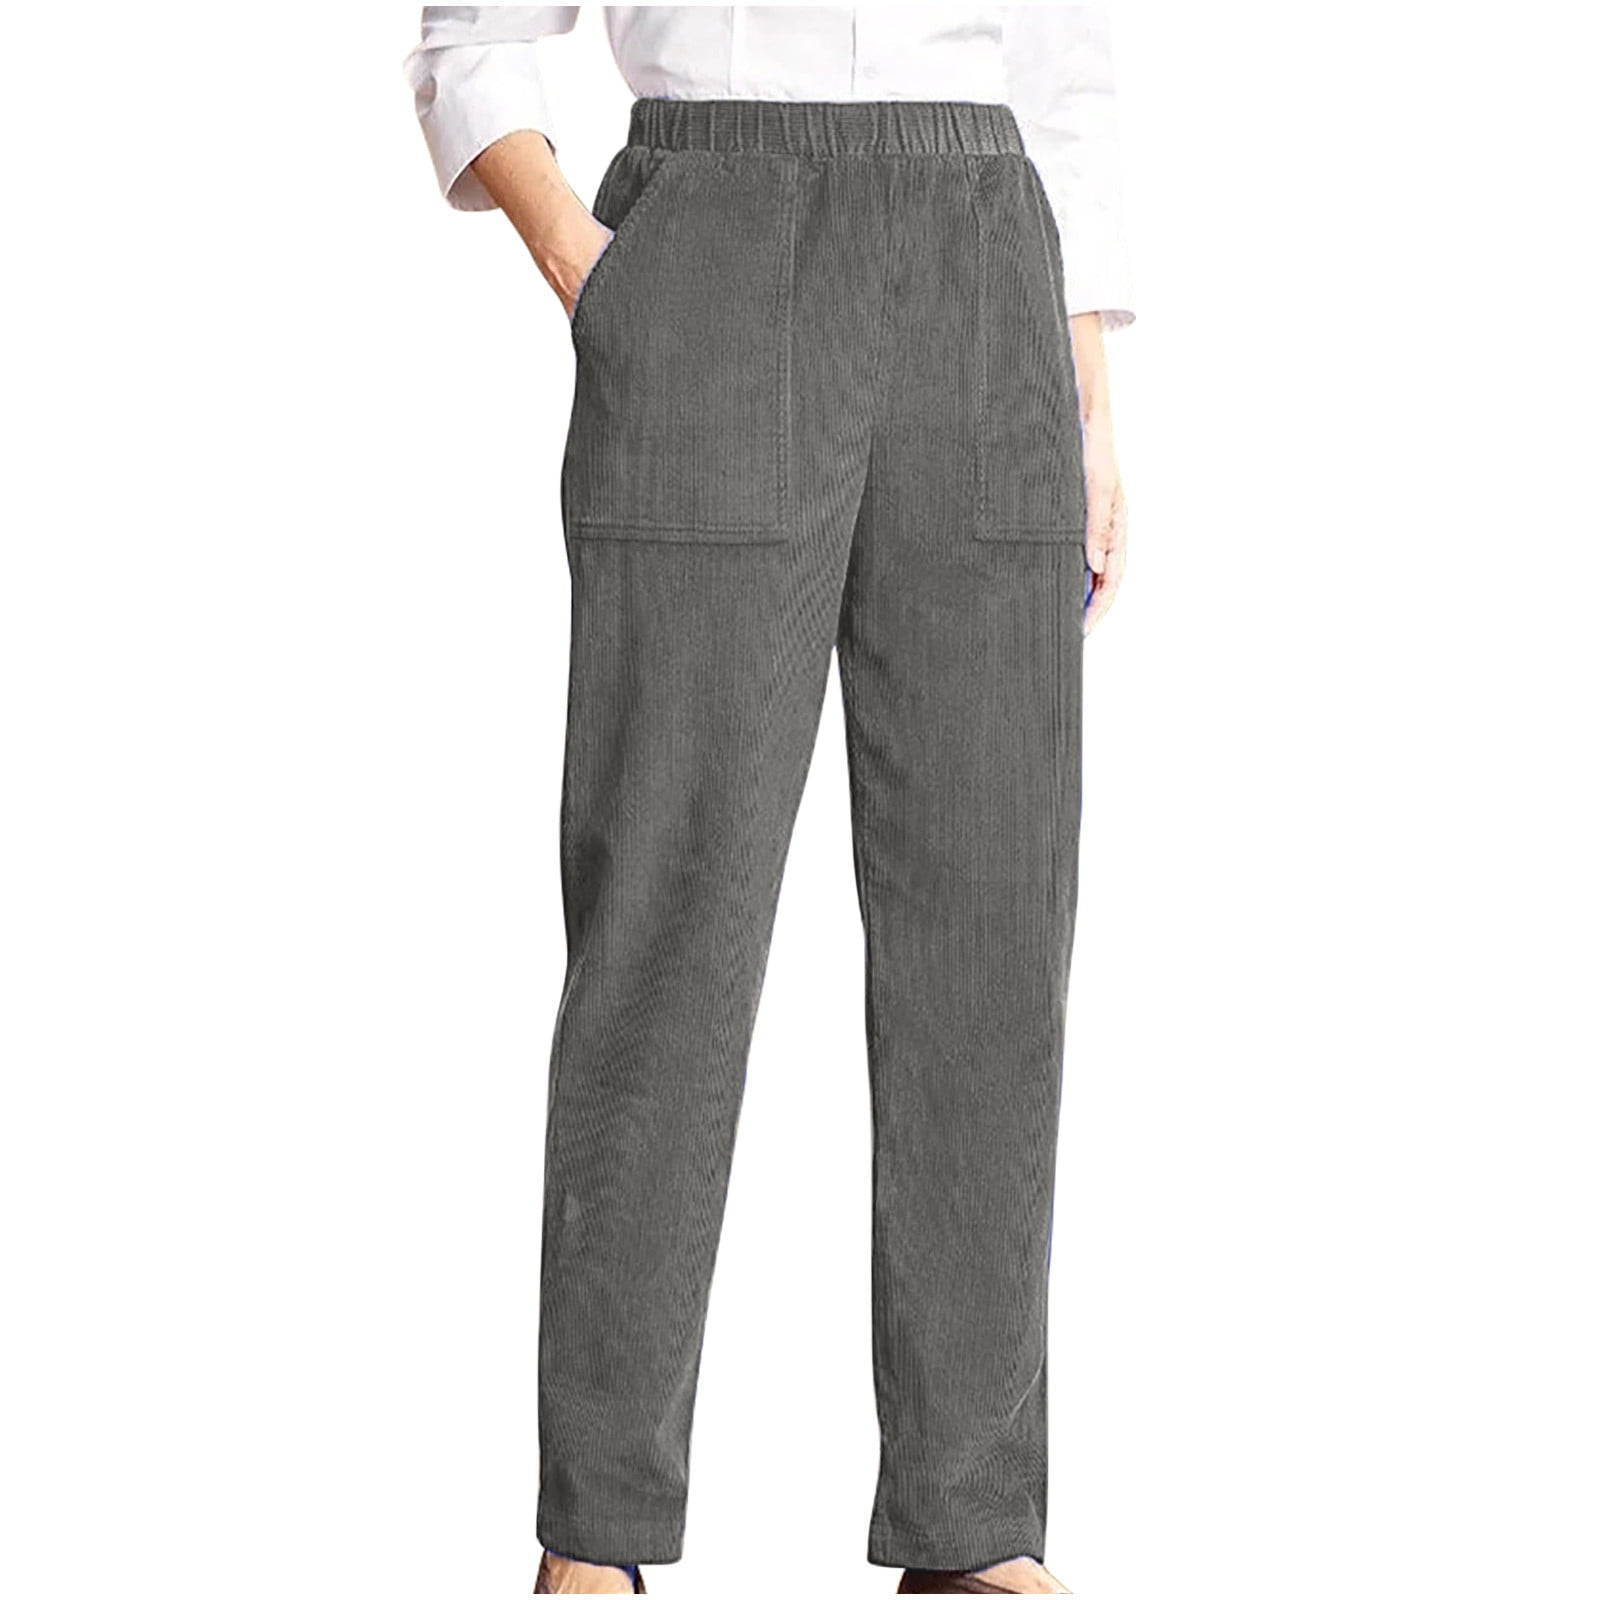 Aofany Women's Solid Pocket Corduroy Pants - Walmart.com